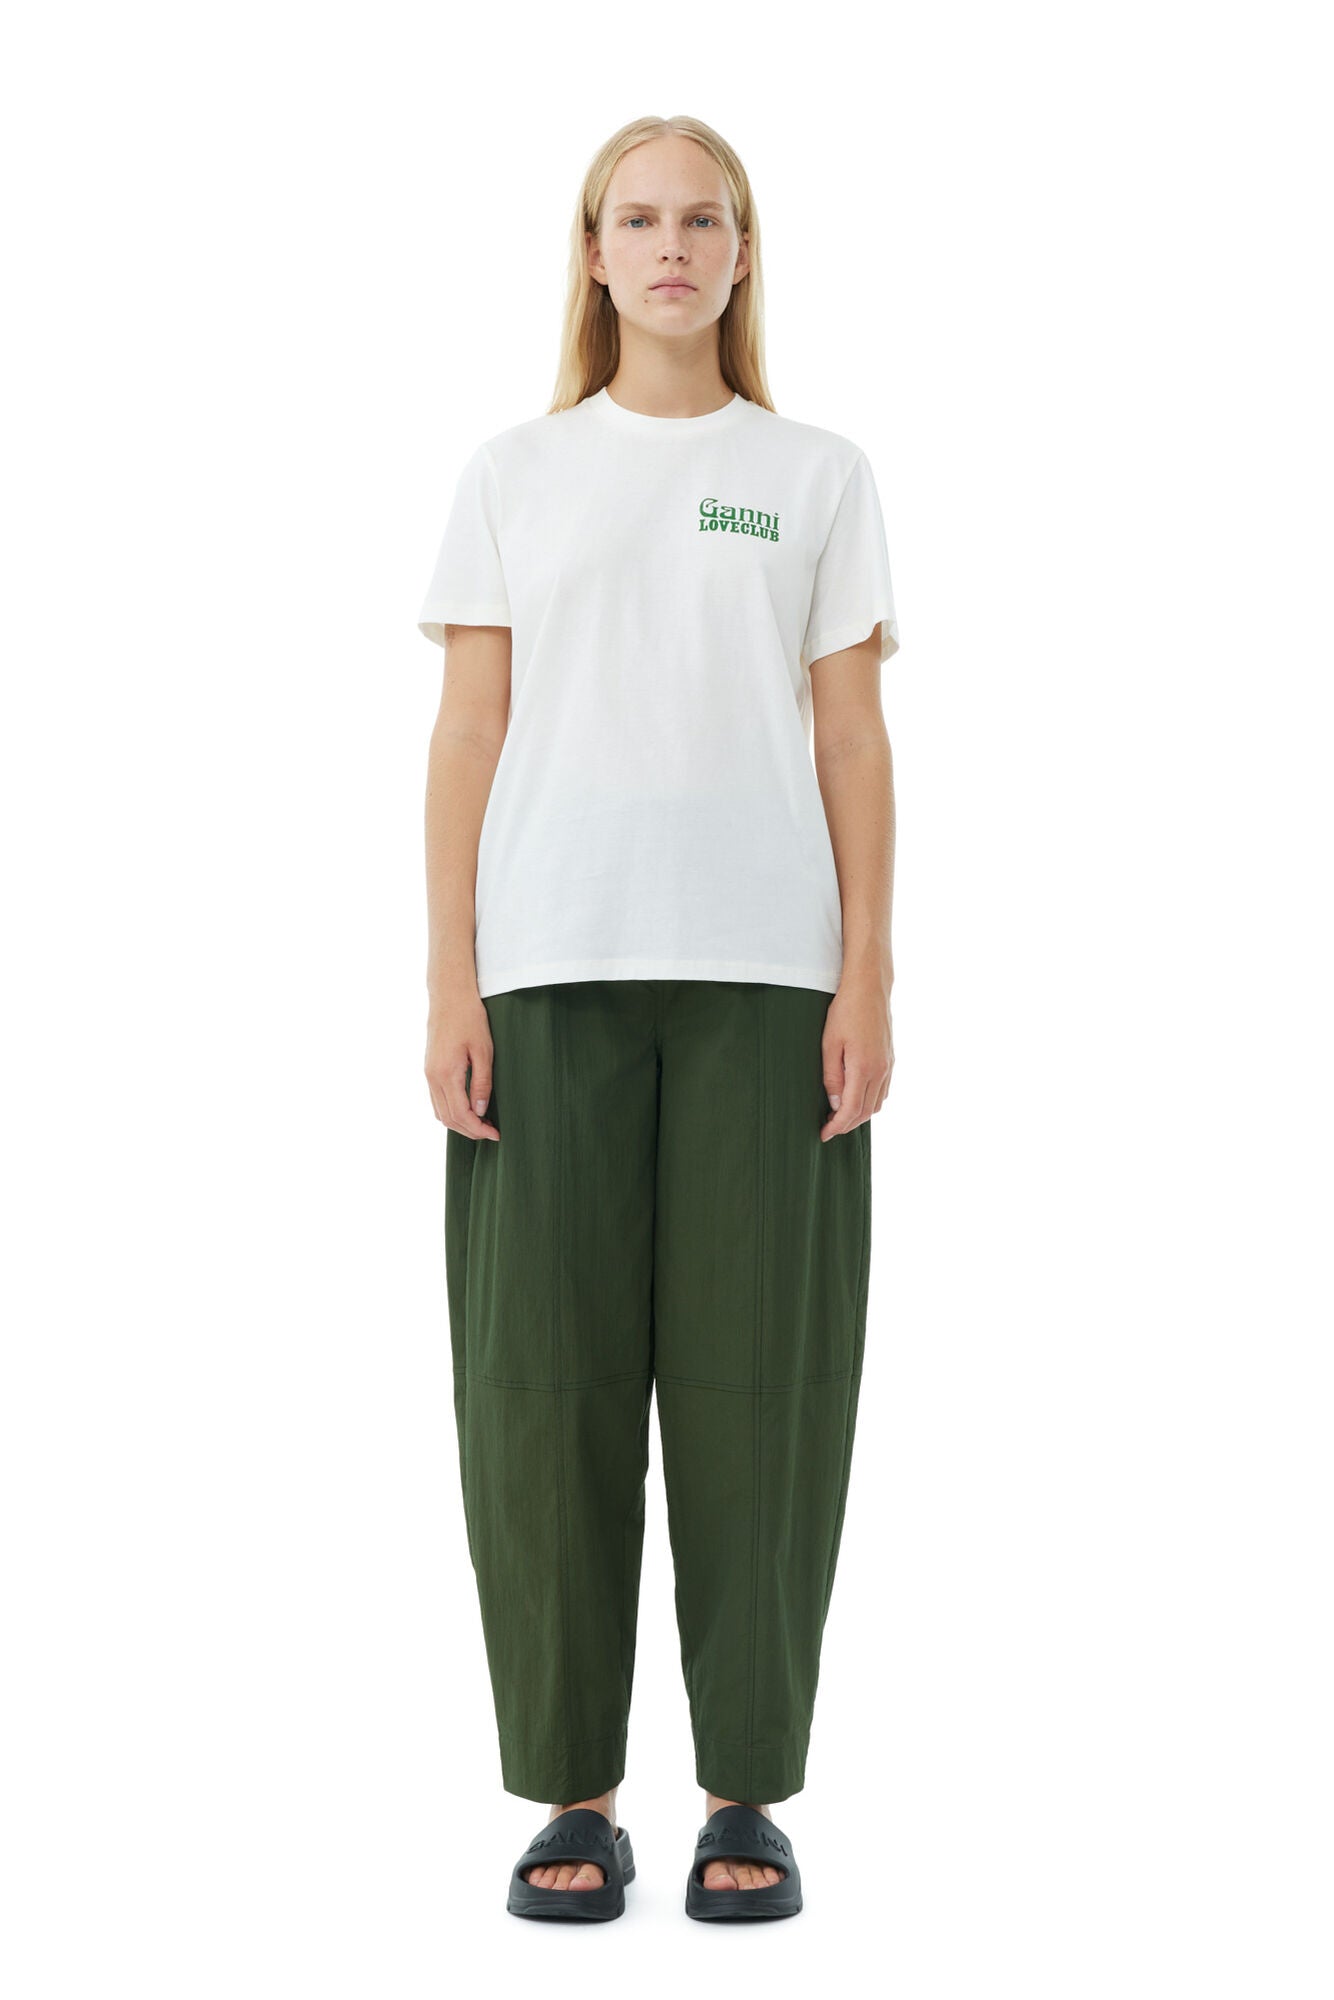 Cotton Crepe Elasticated Curve Pants - Kombu Green - GANNI - Danali - F8924